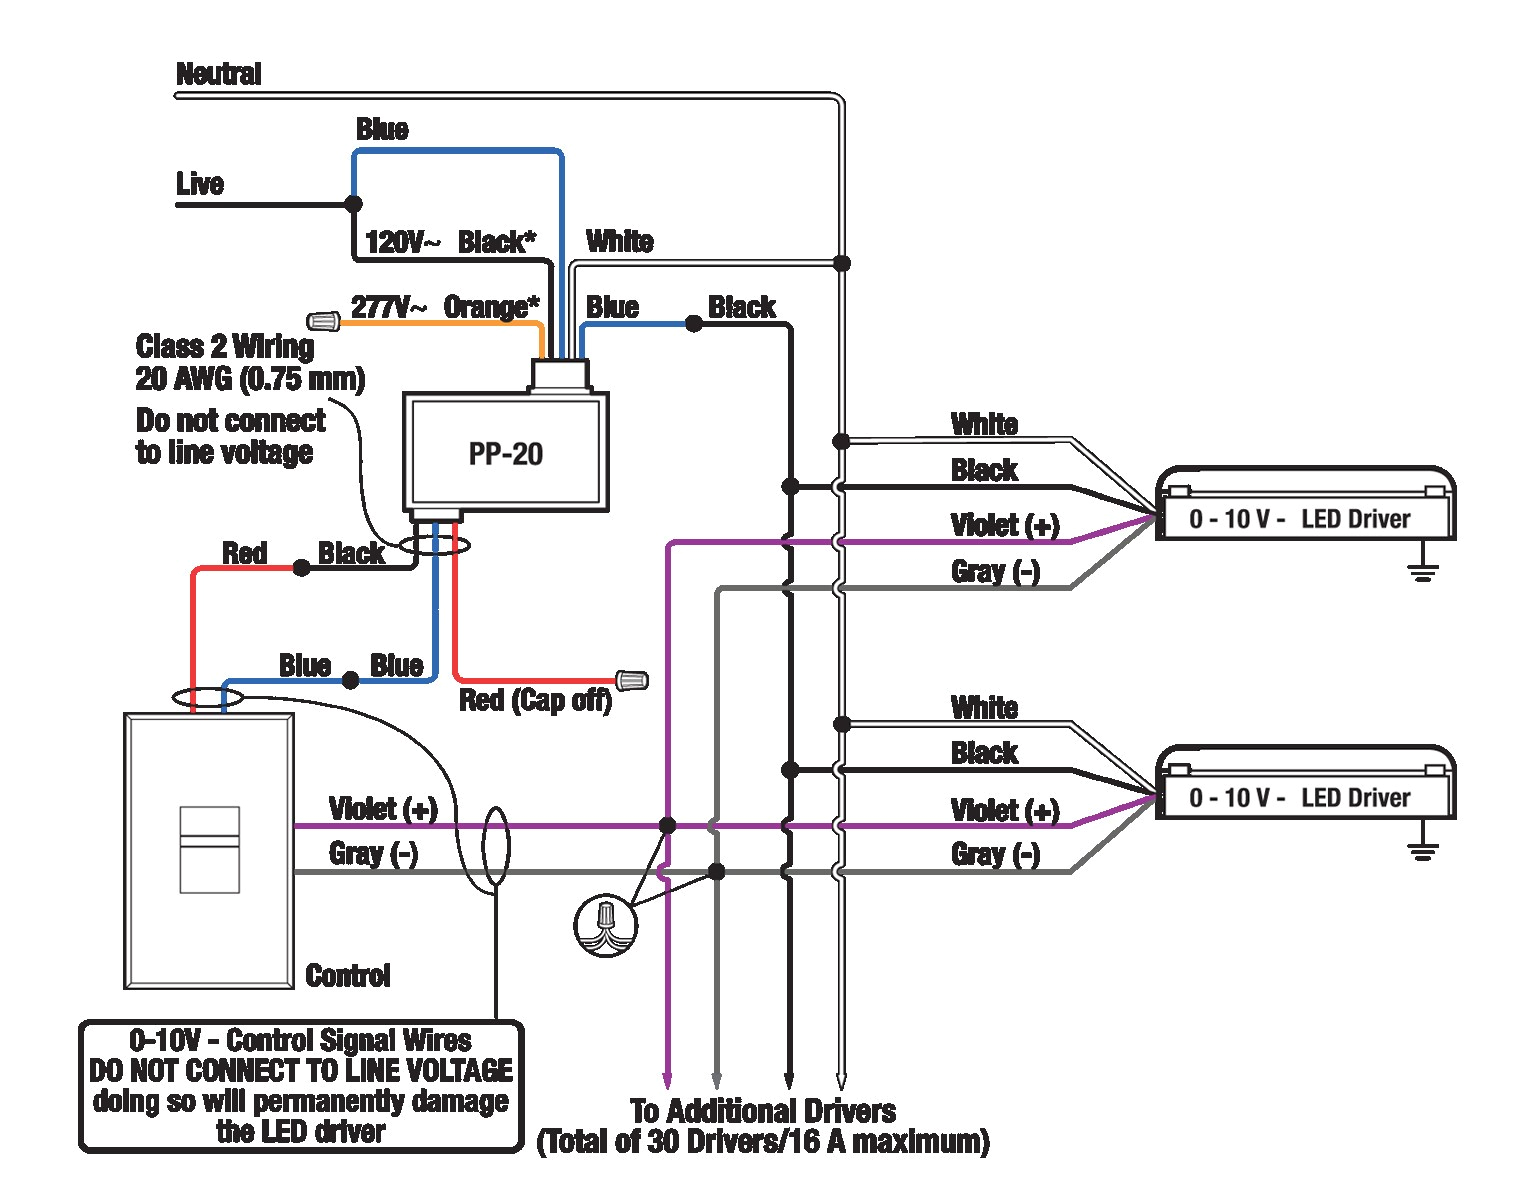 Lutron Grx Tvi Wiring Diagram Lutron Ma 600 Wiring Black Brass Wiring Diagram Official